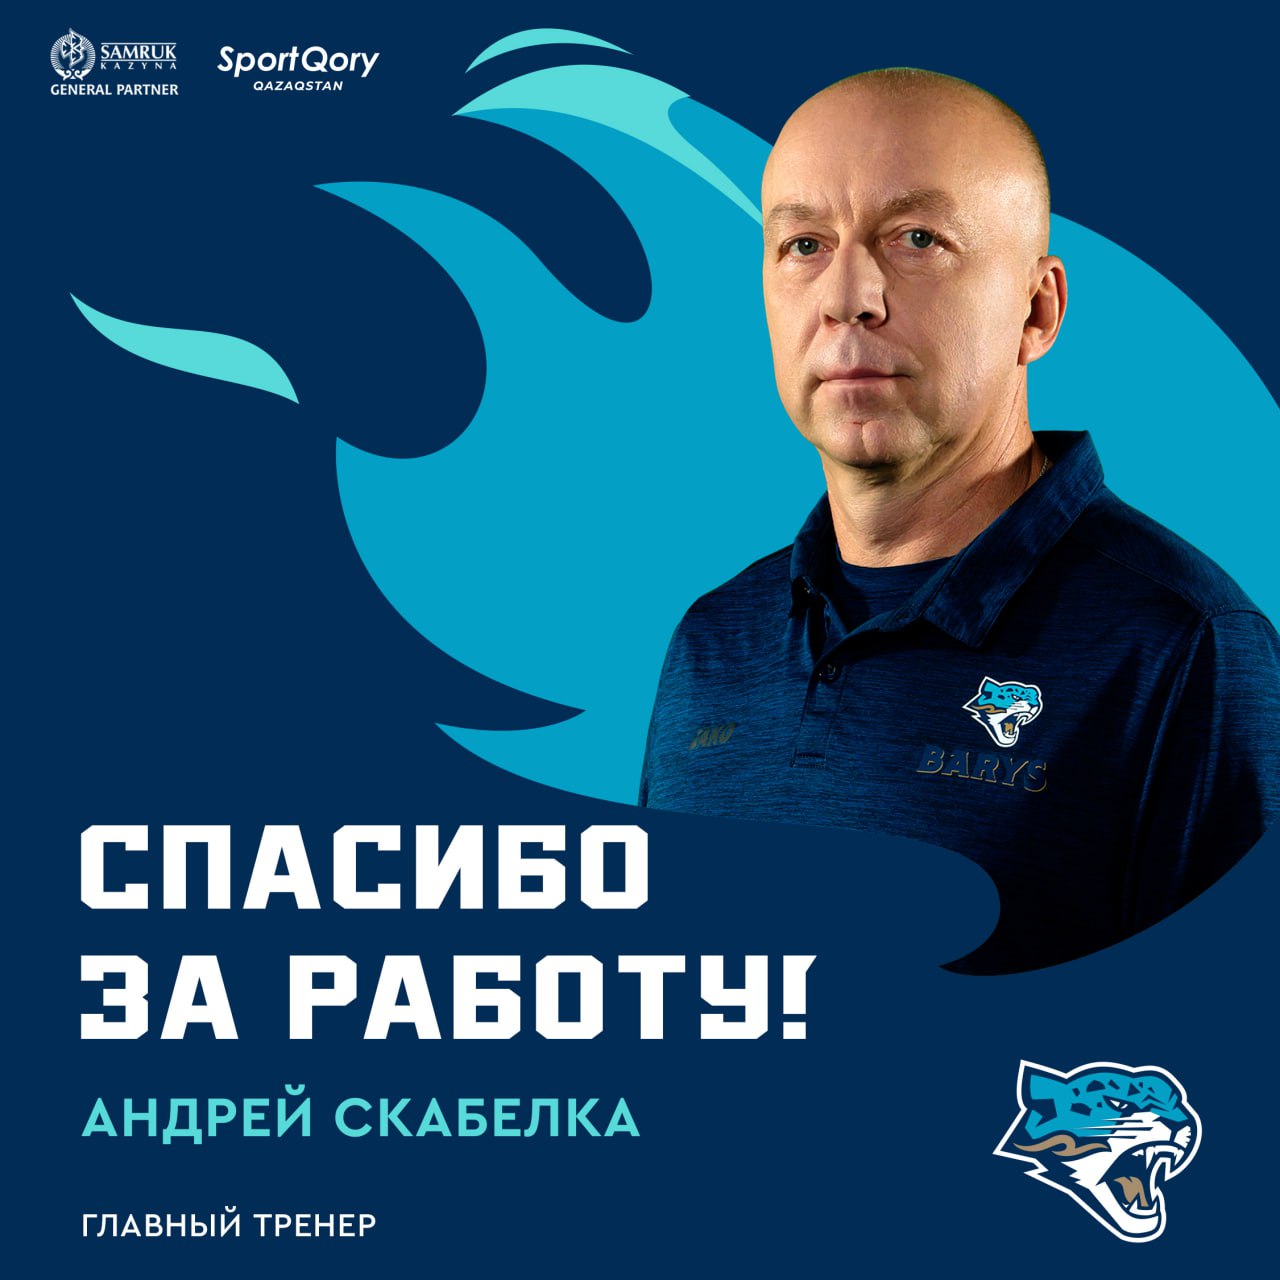 Скабелка покинул пост главного тренера «Барыса»